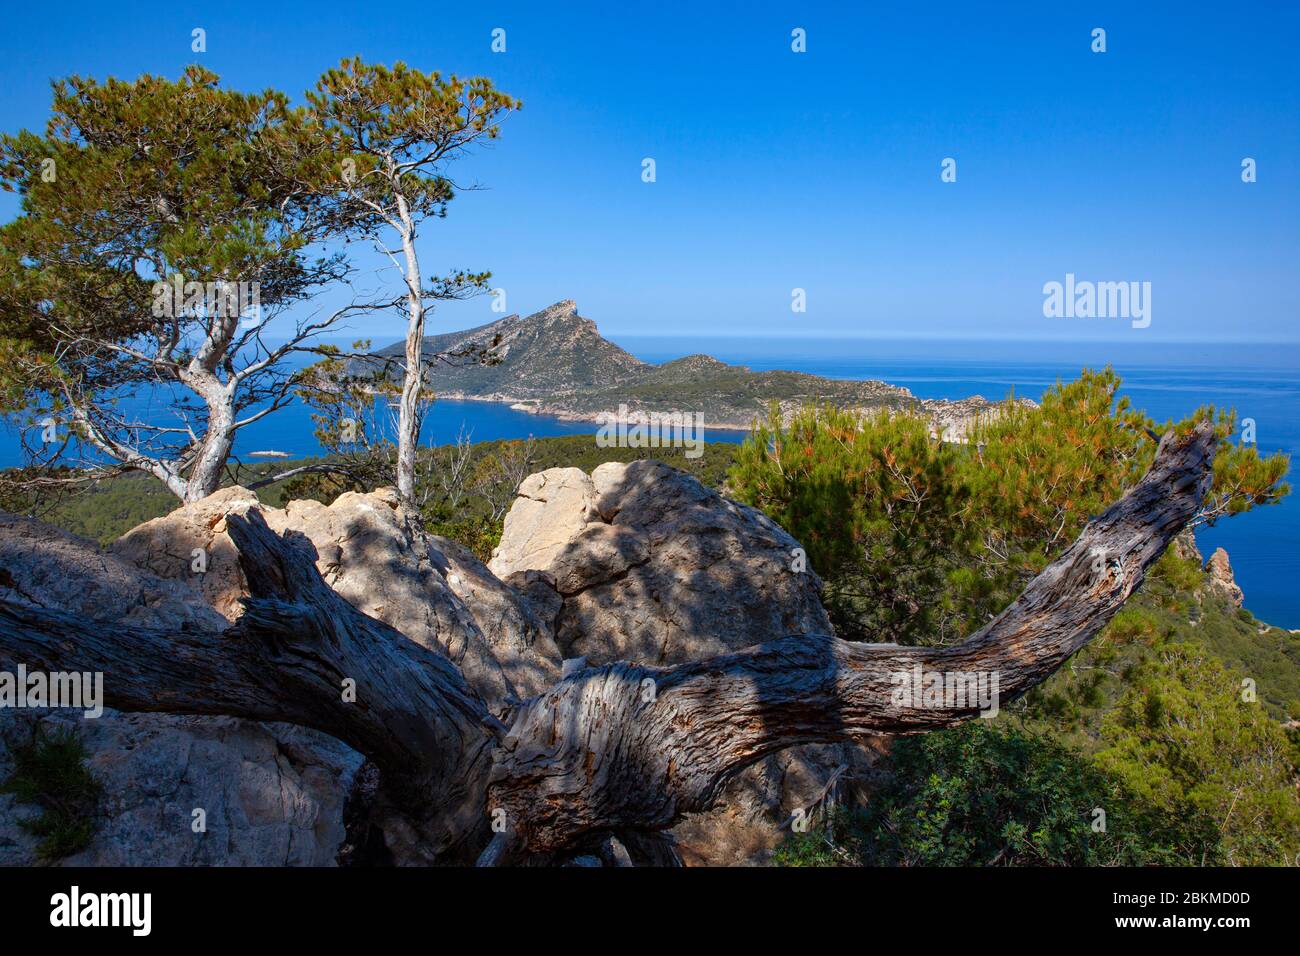 View of Dragonera from Reserva Biológica de la Trapa, Sant Elm, Mallorca, Balearic Islands, Spain Stock Photo